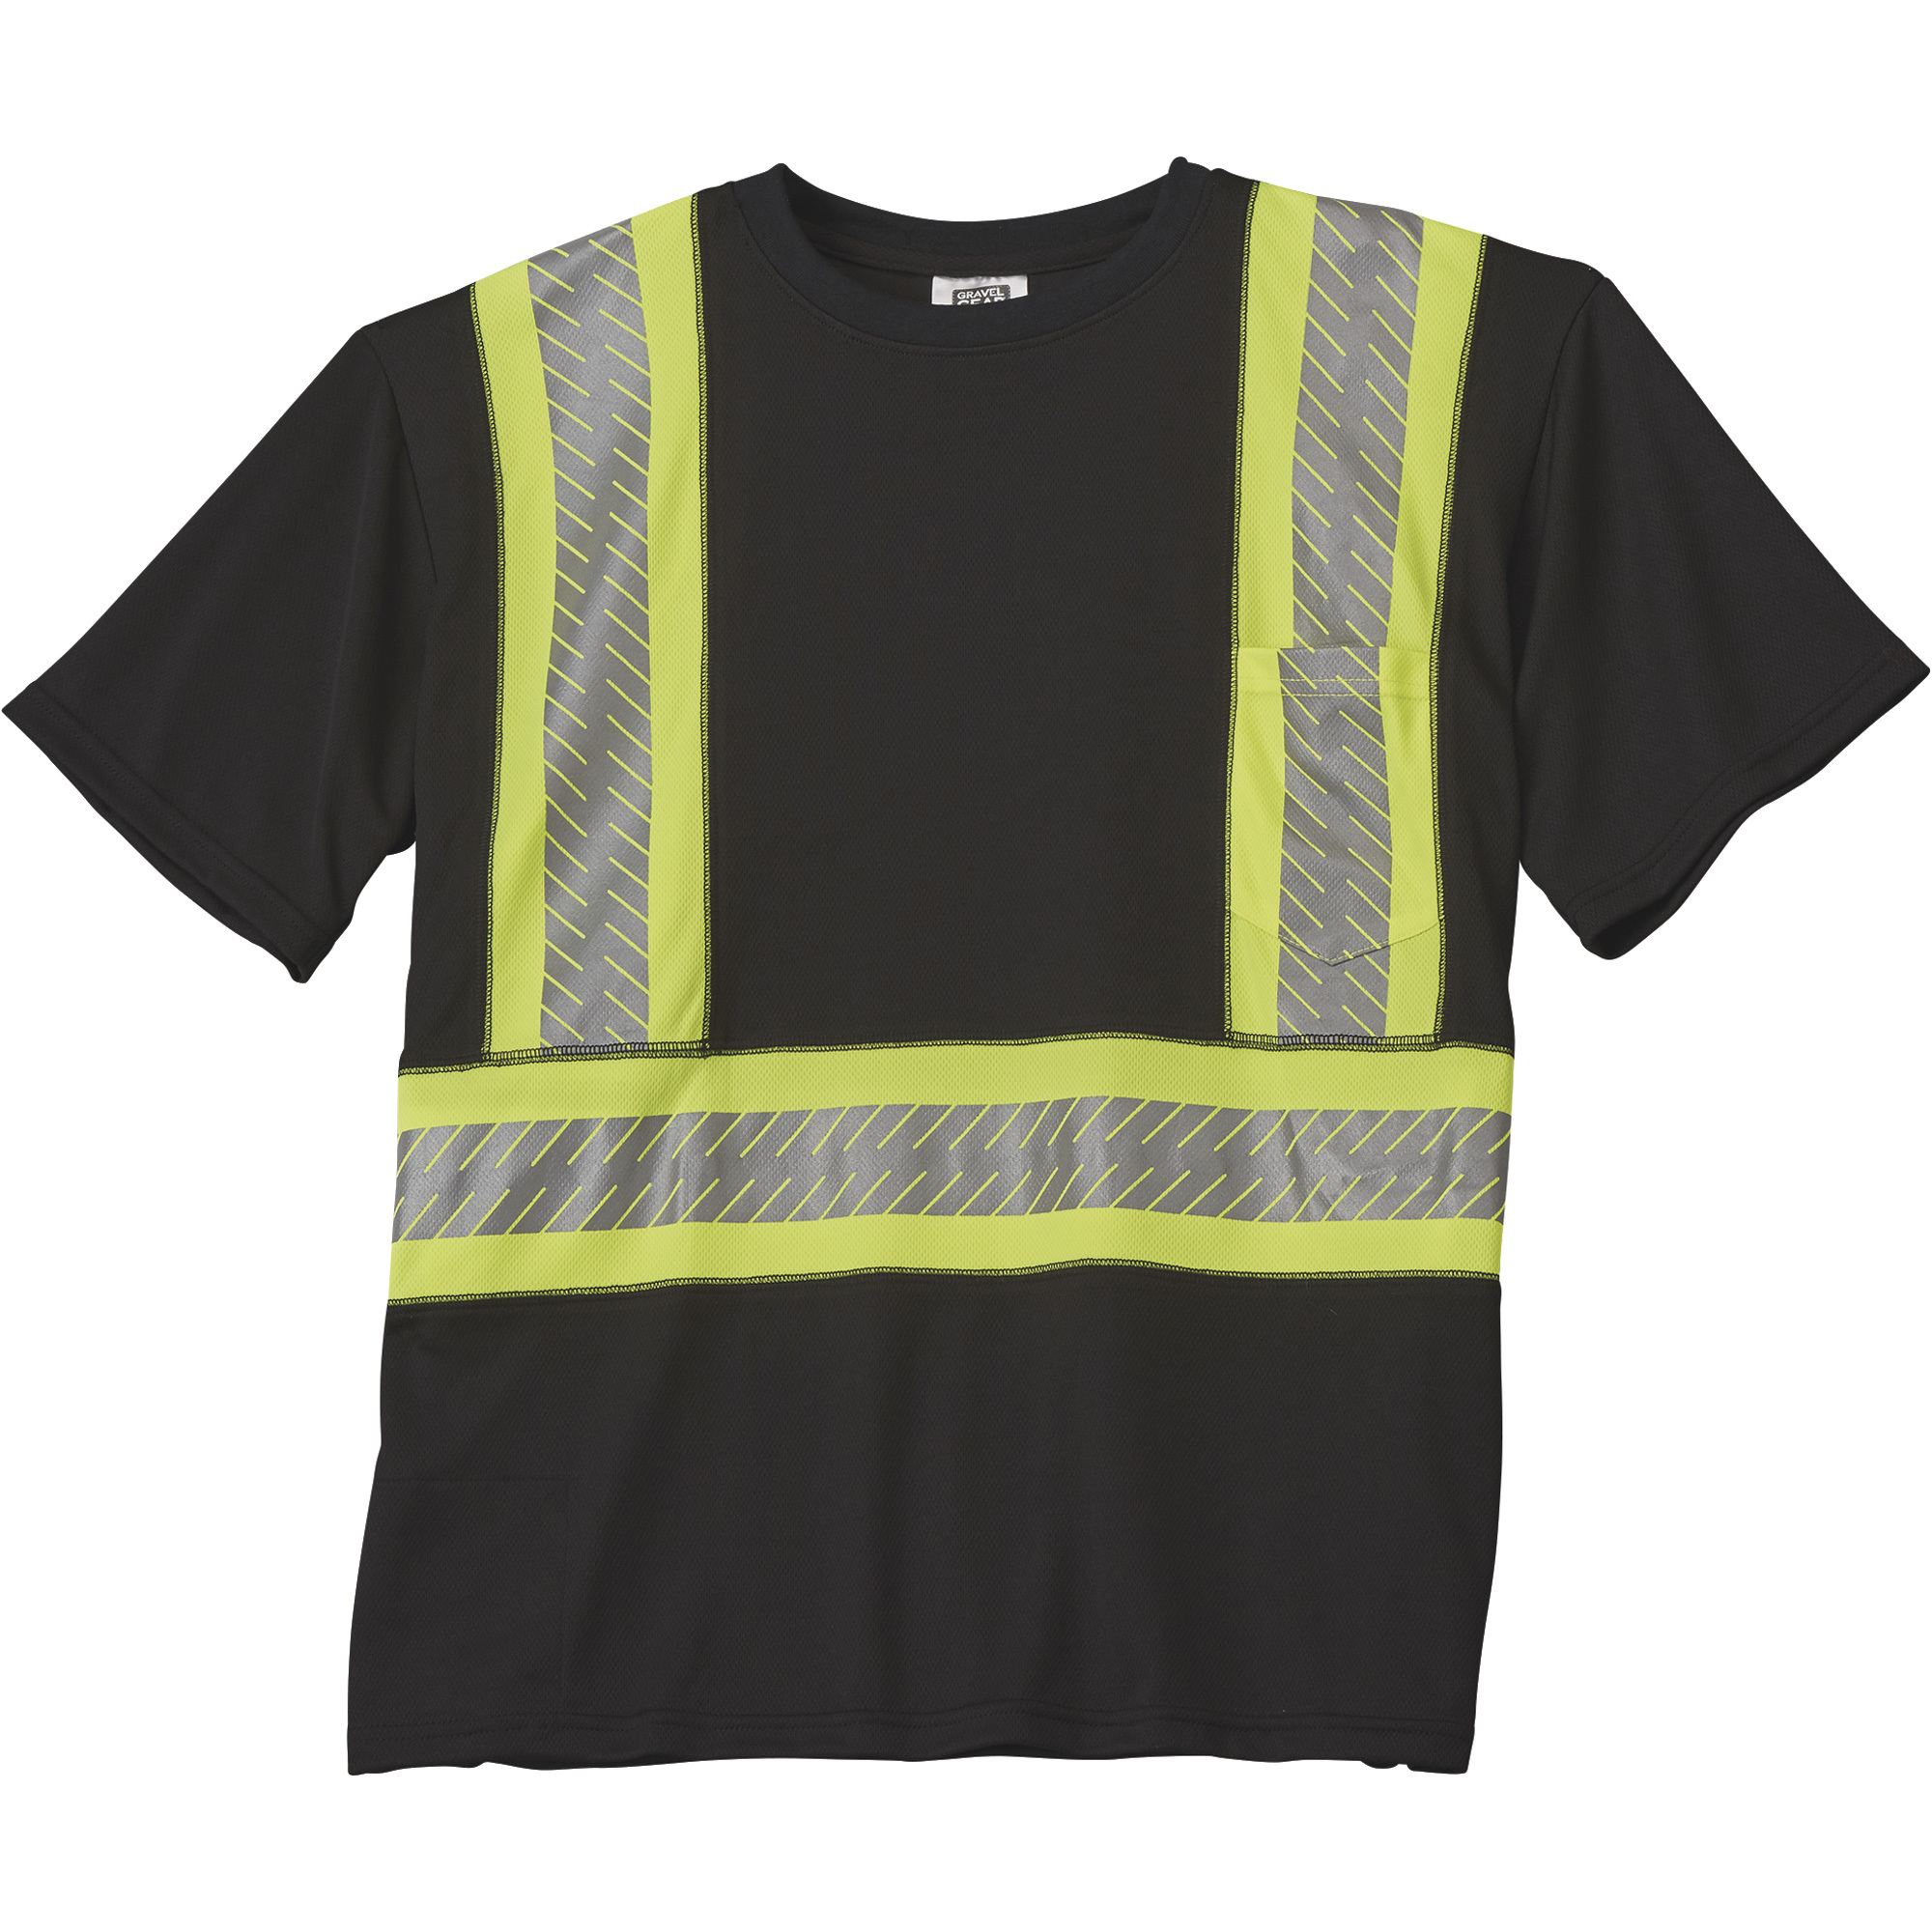 Gravel Gear Menâs Class 1 Short Sleeve T-Shirt â Black/Lime, 2XL